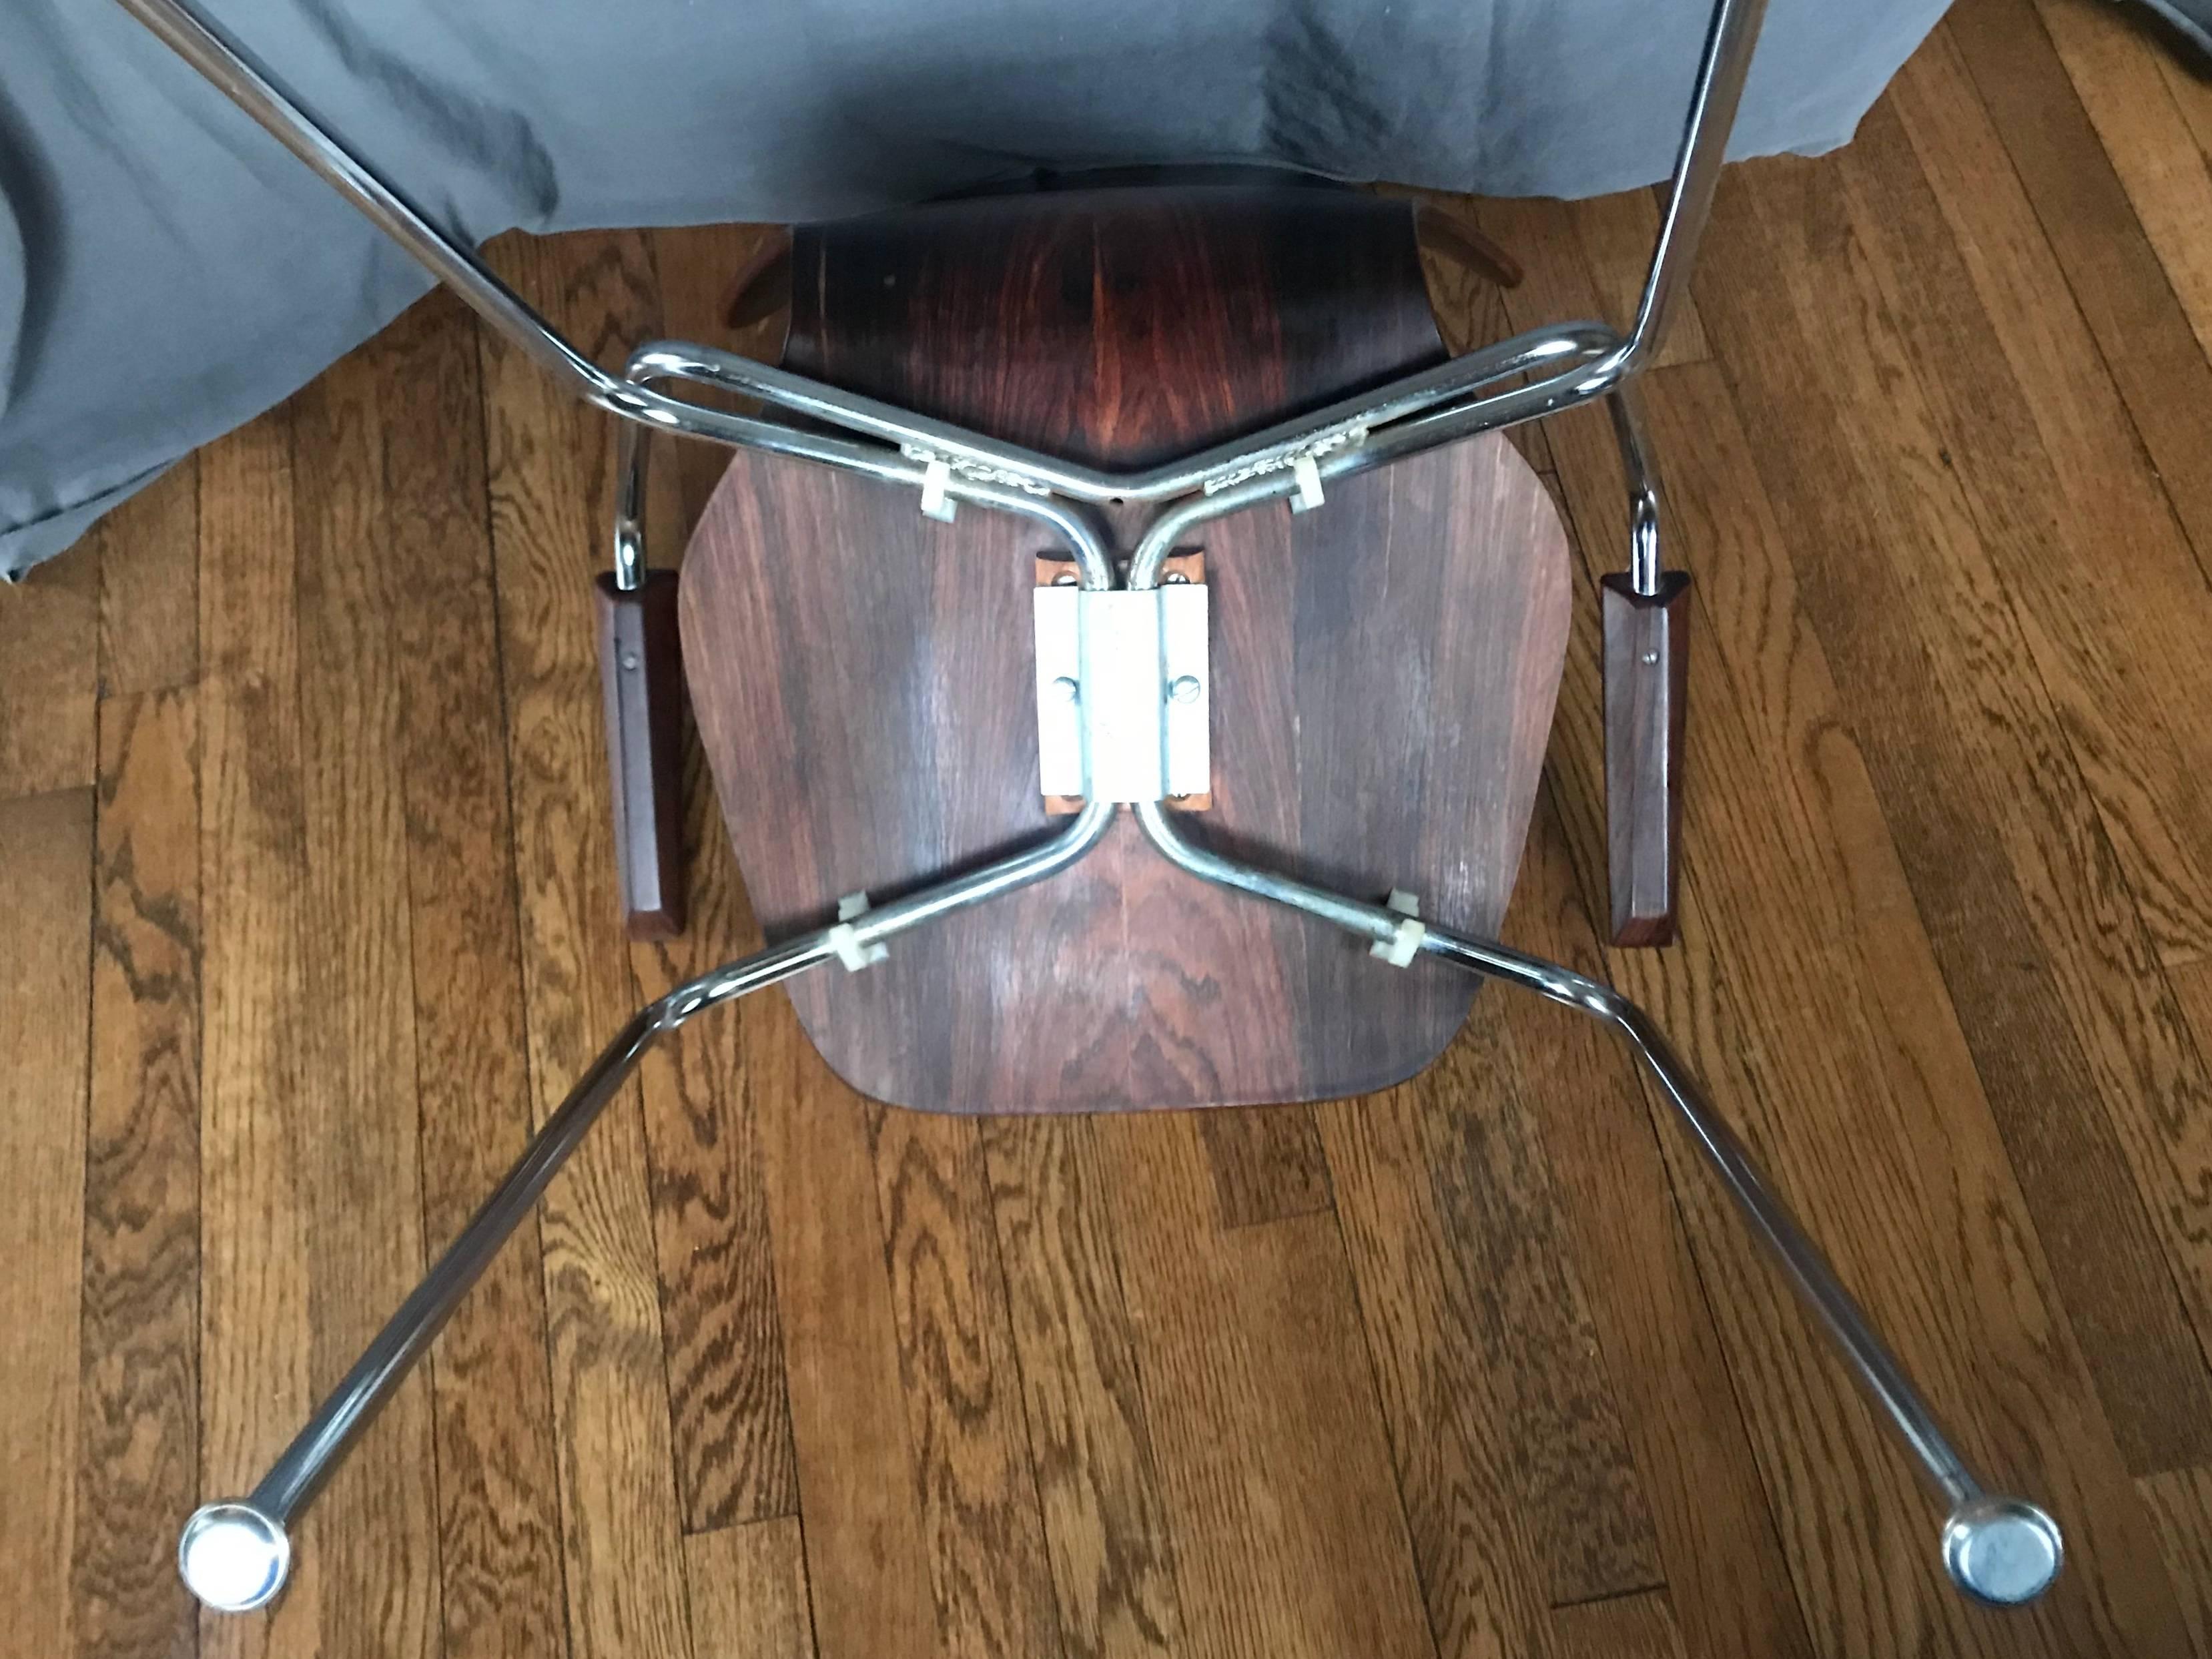 Midcentury Danish Rosewood Chair 3